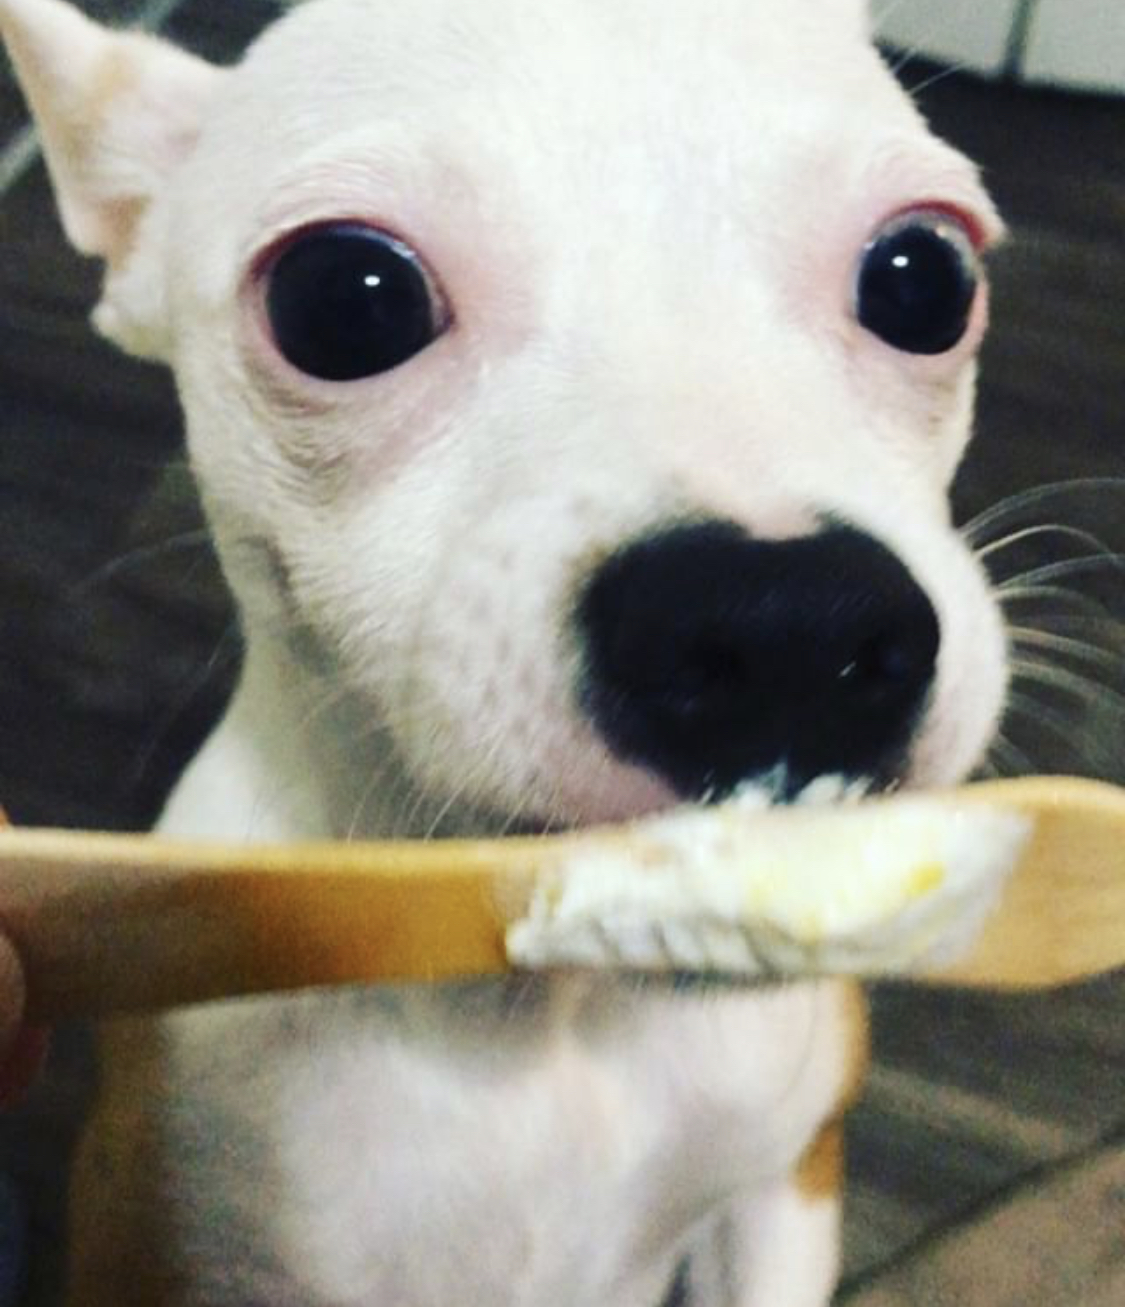 A Chihuahua licking an ice cream